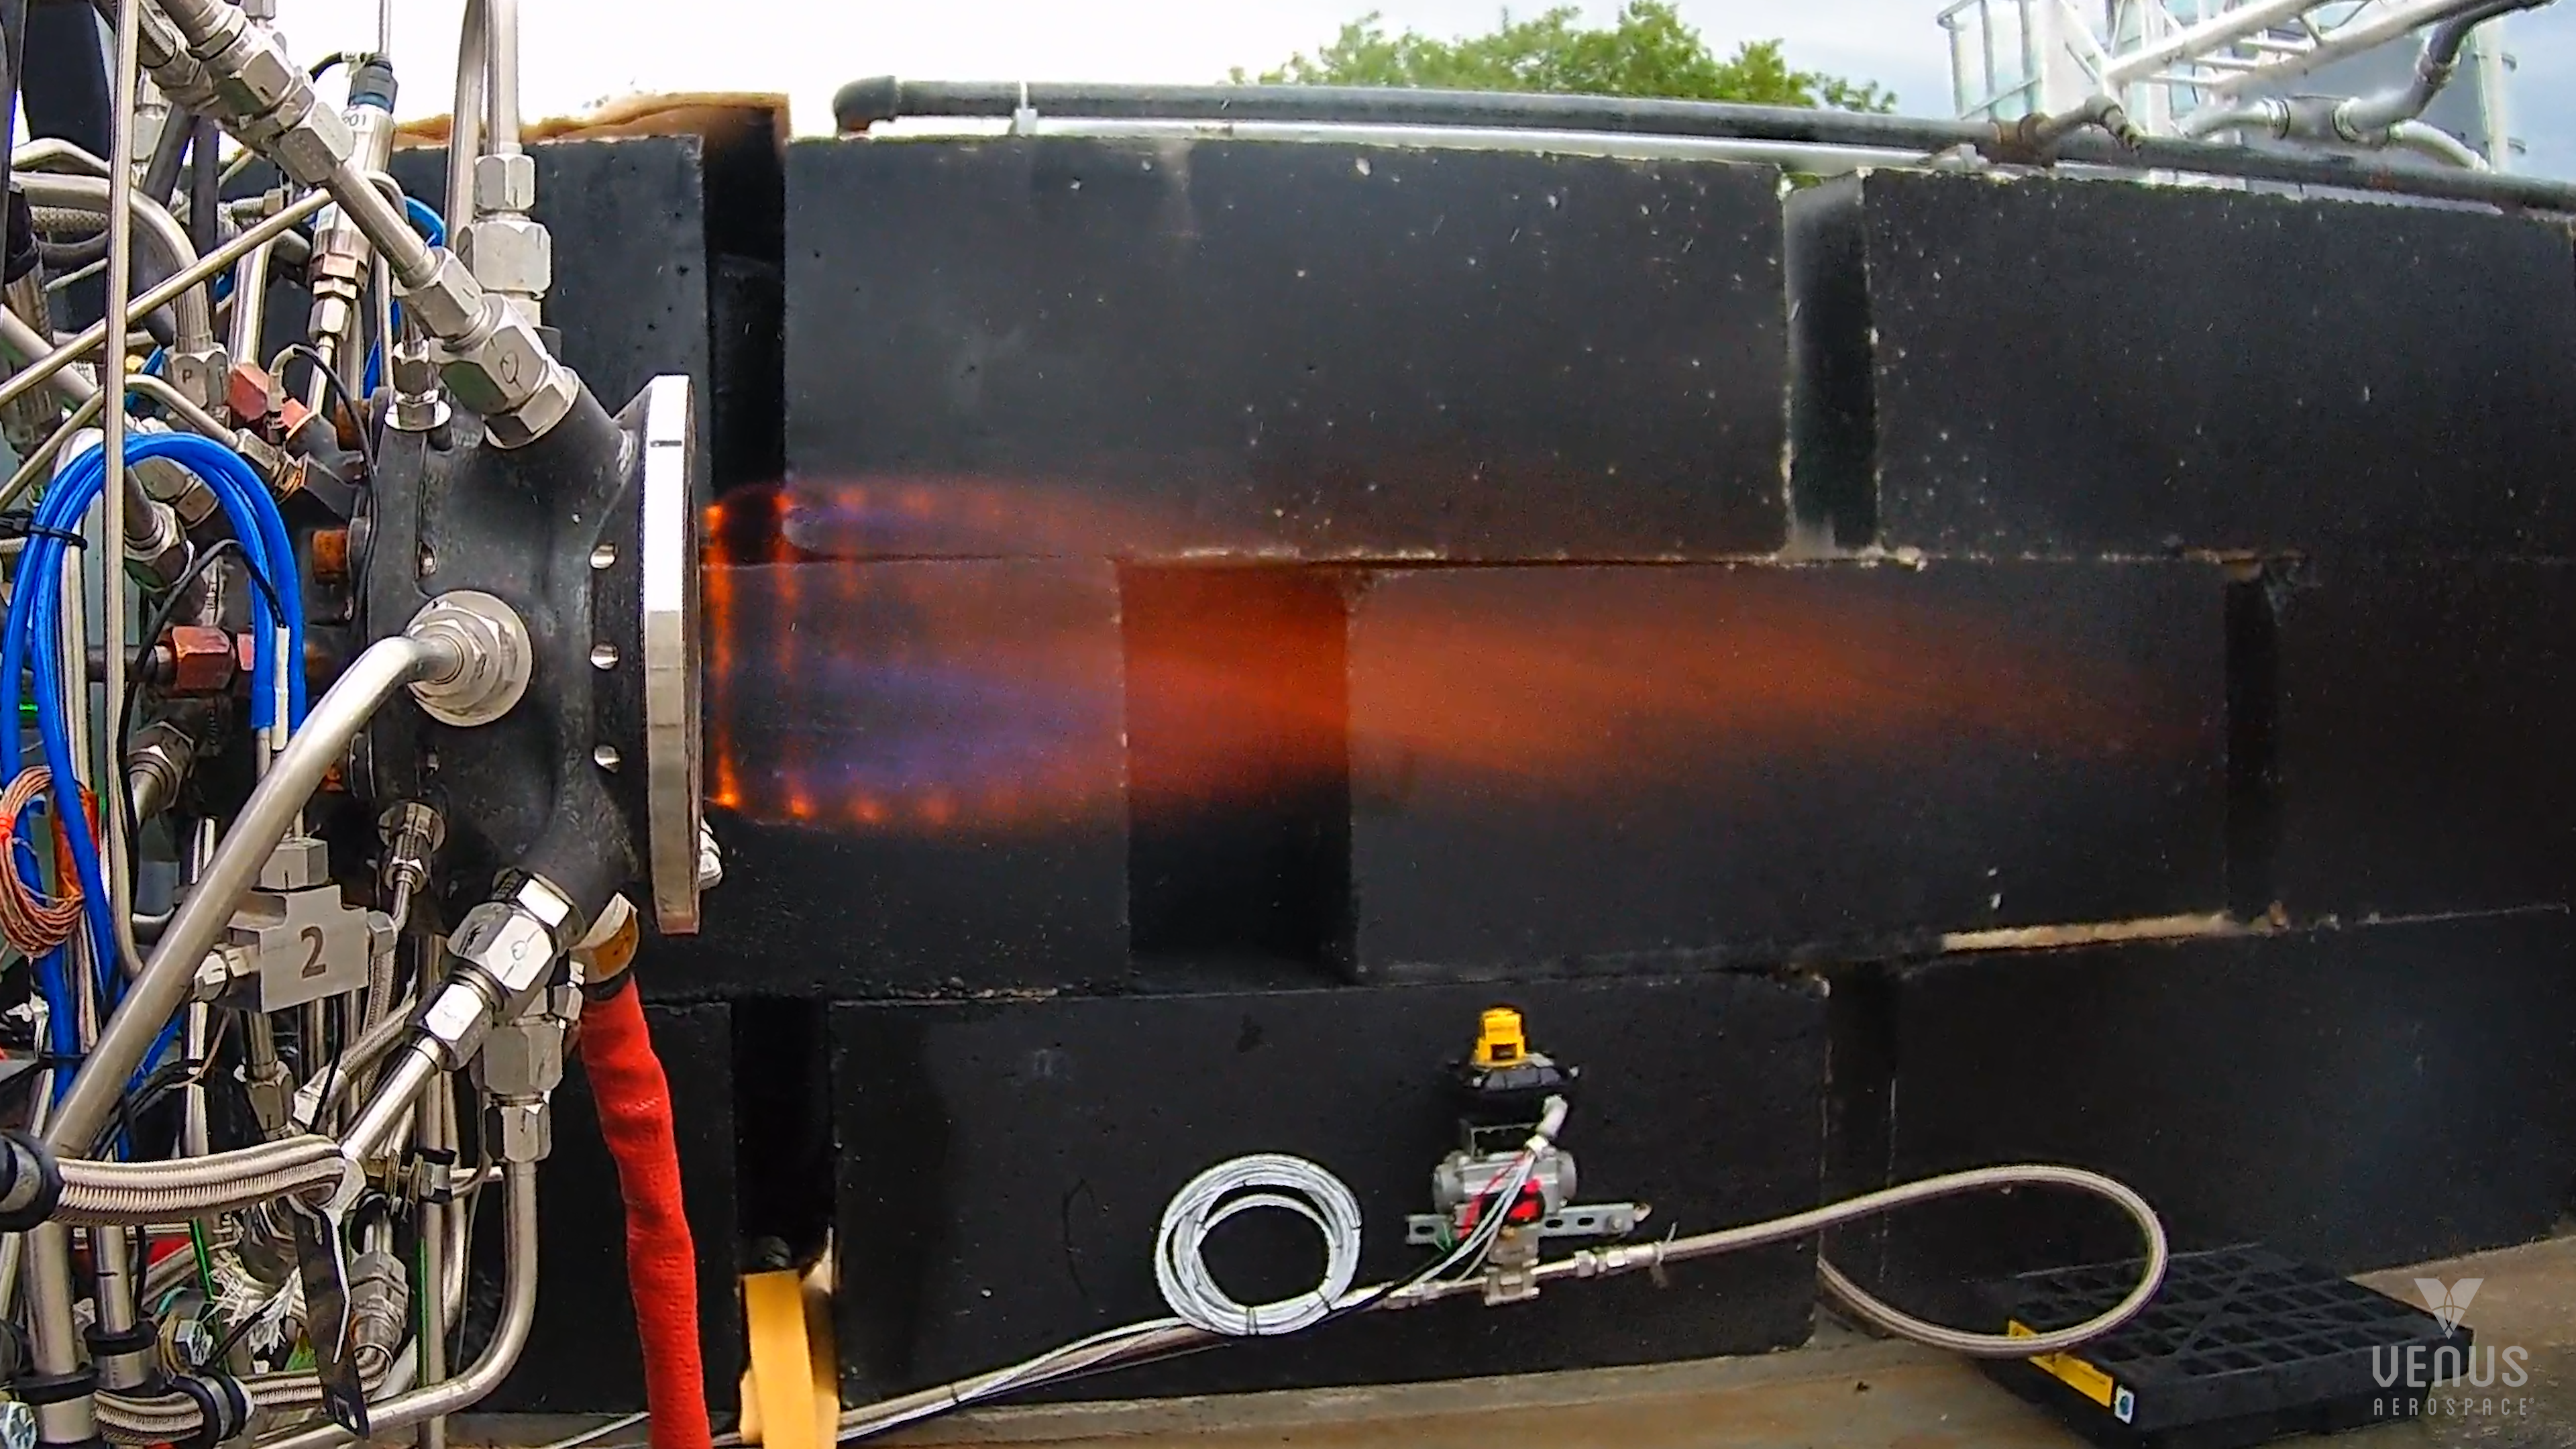 Venus Aerospace Rotating Detonation Rocket Engine Achieves Long-Duration Run